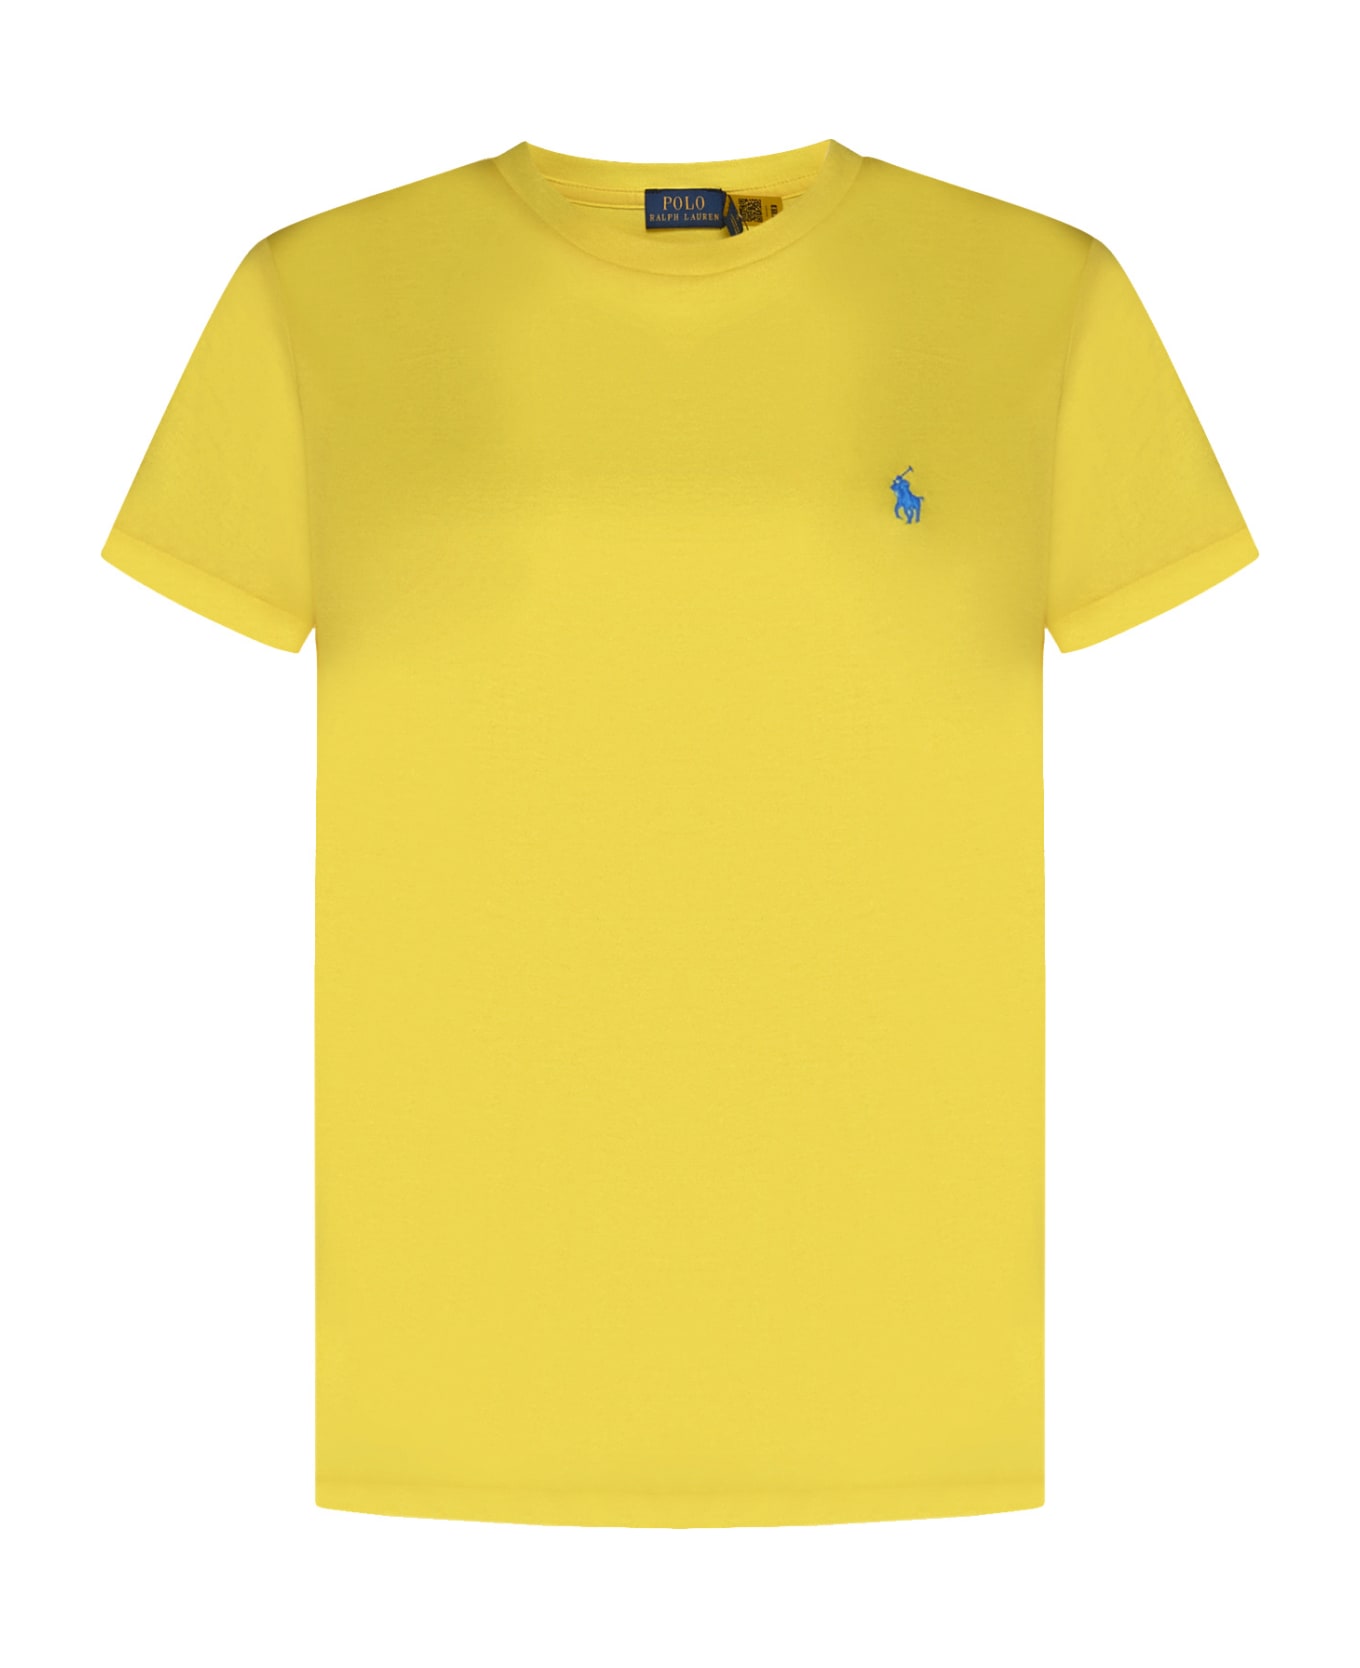 Polo Ralph Lauren T-Shirt - Coastal yellow